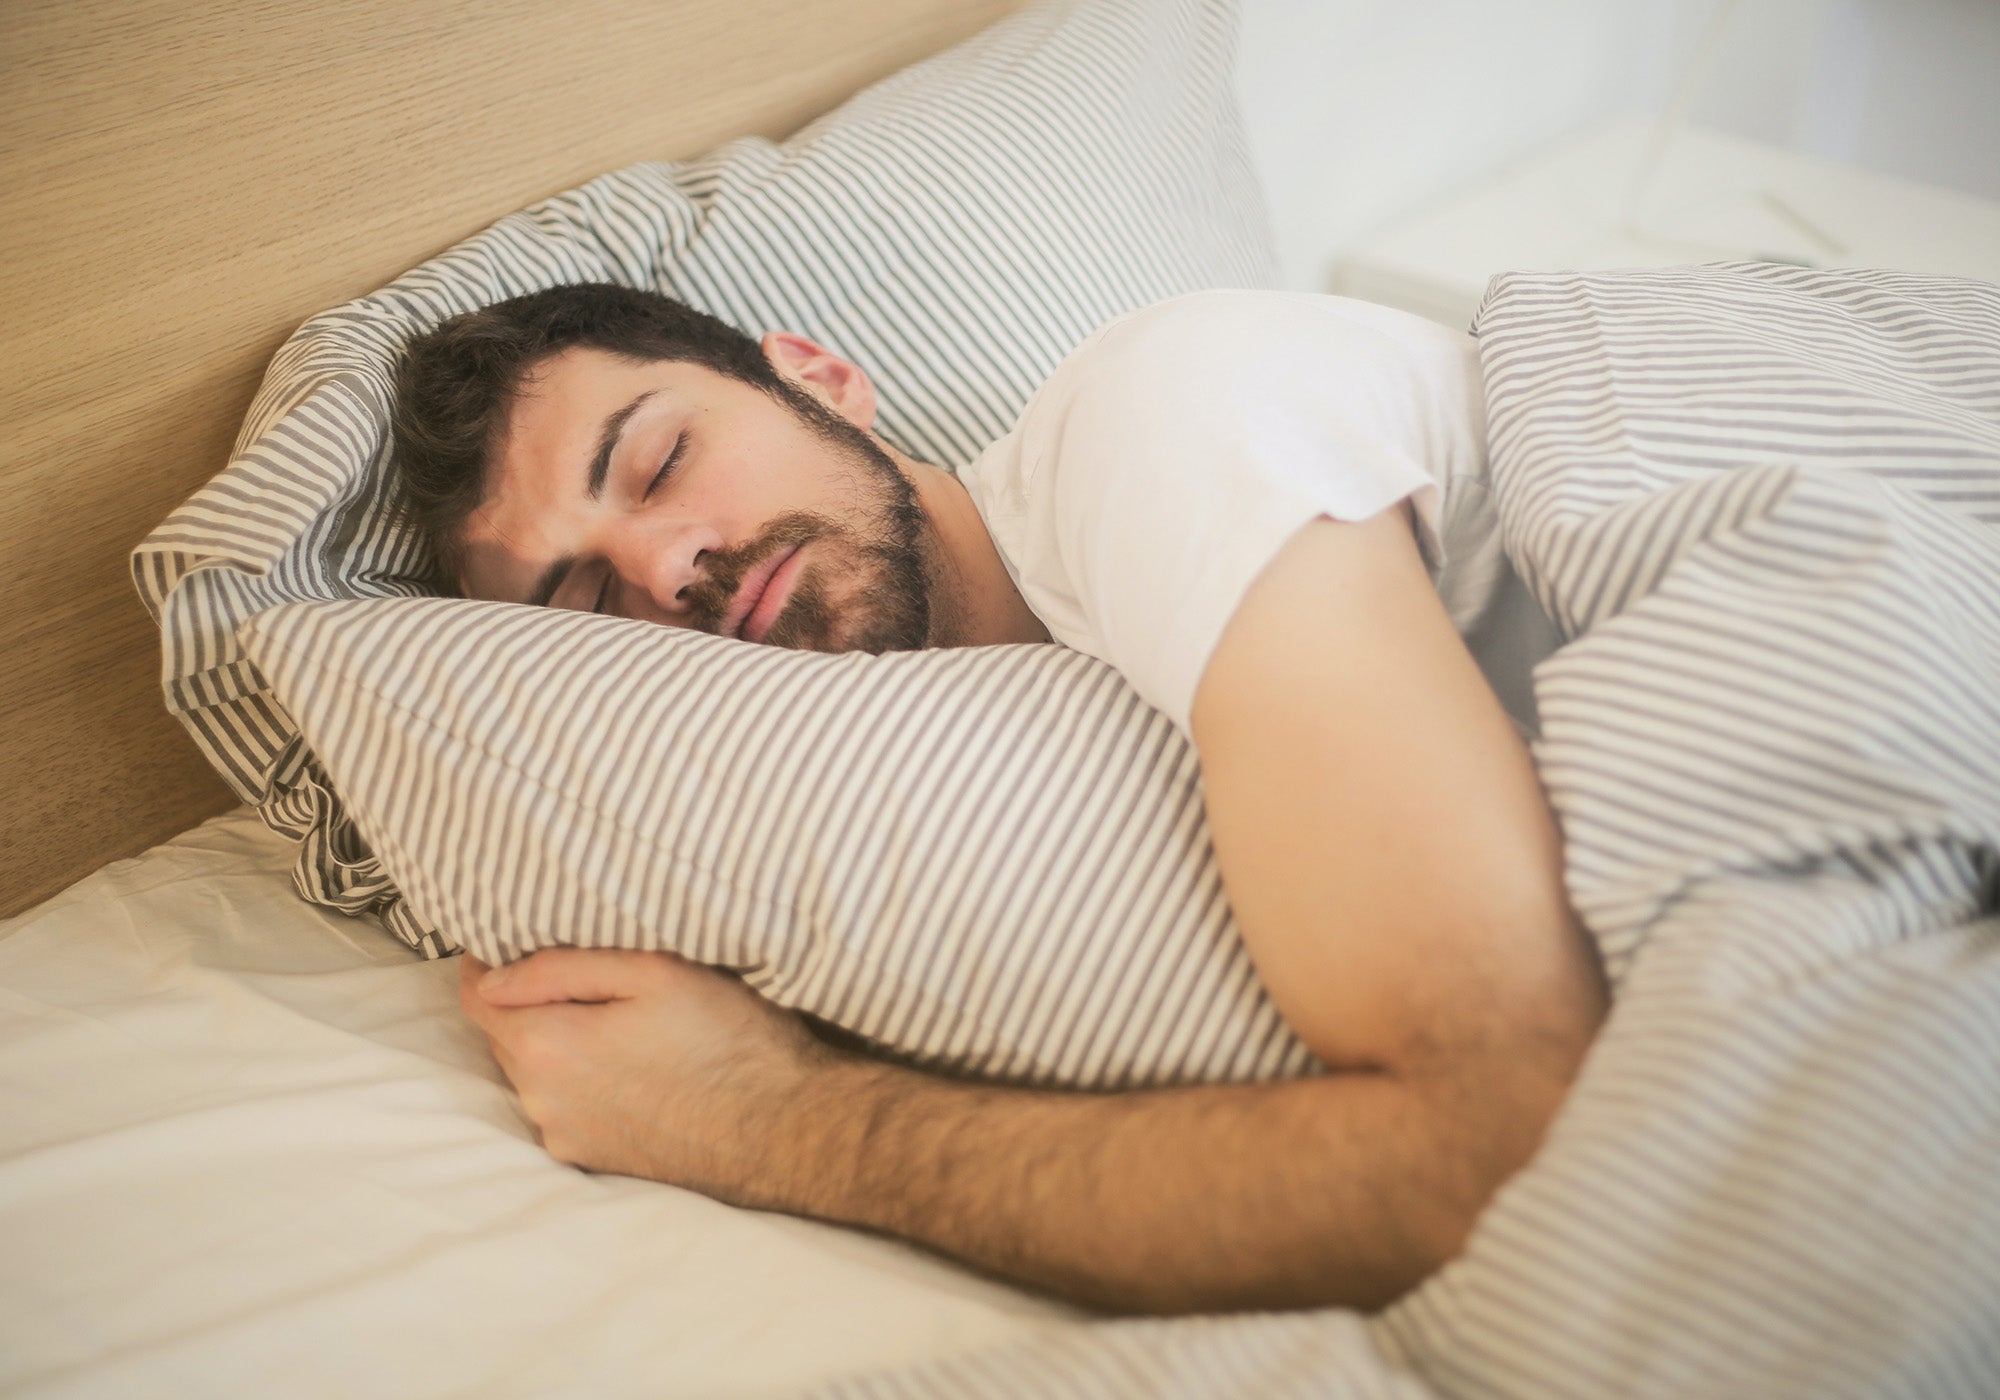 Sleep is important for gut health